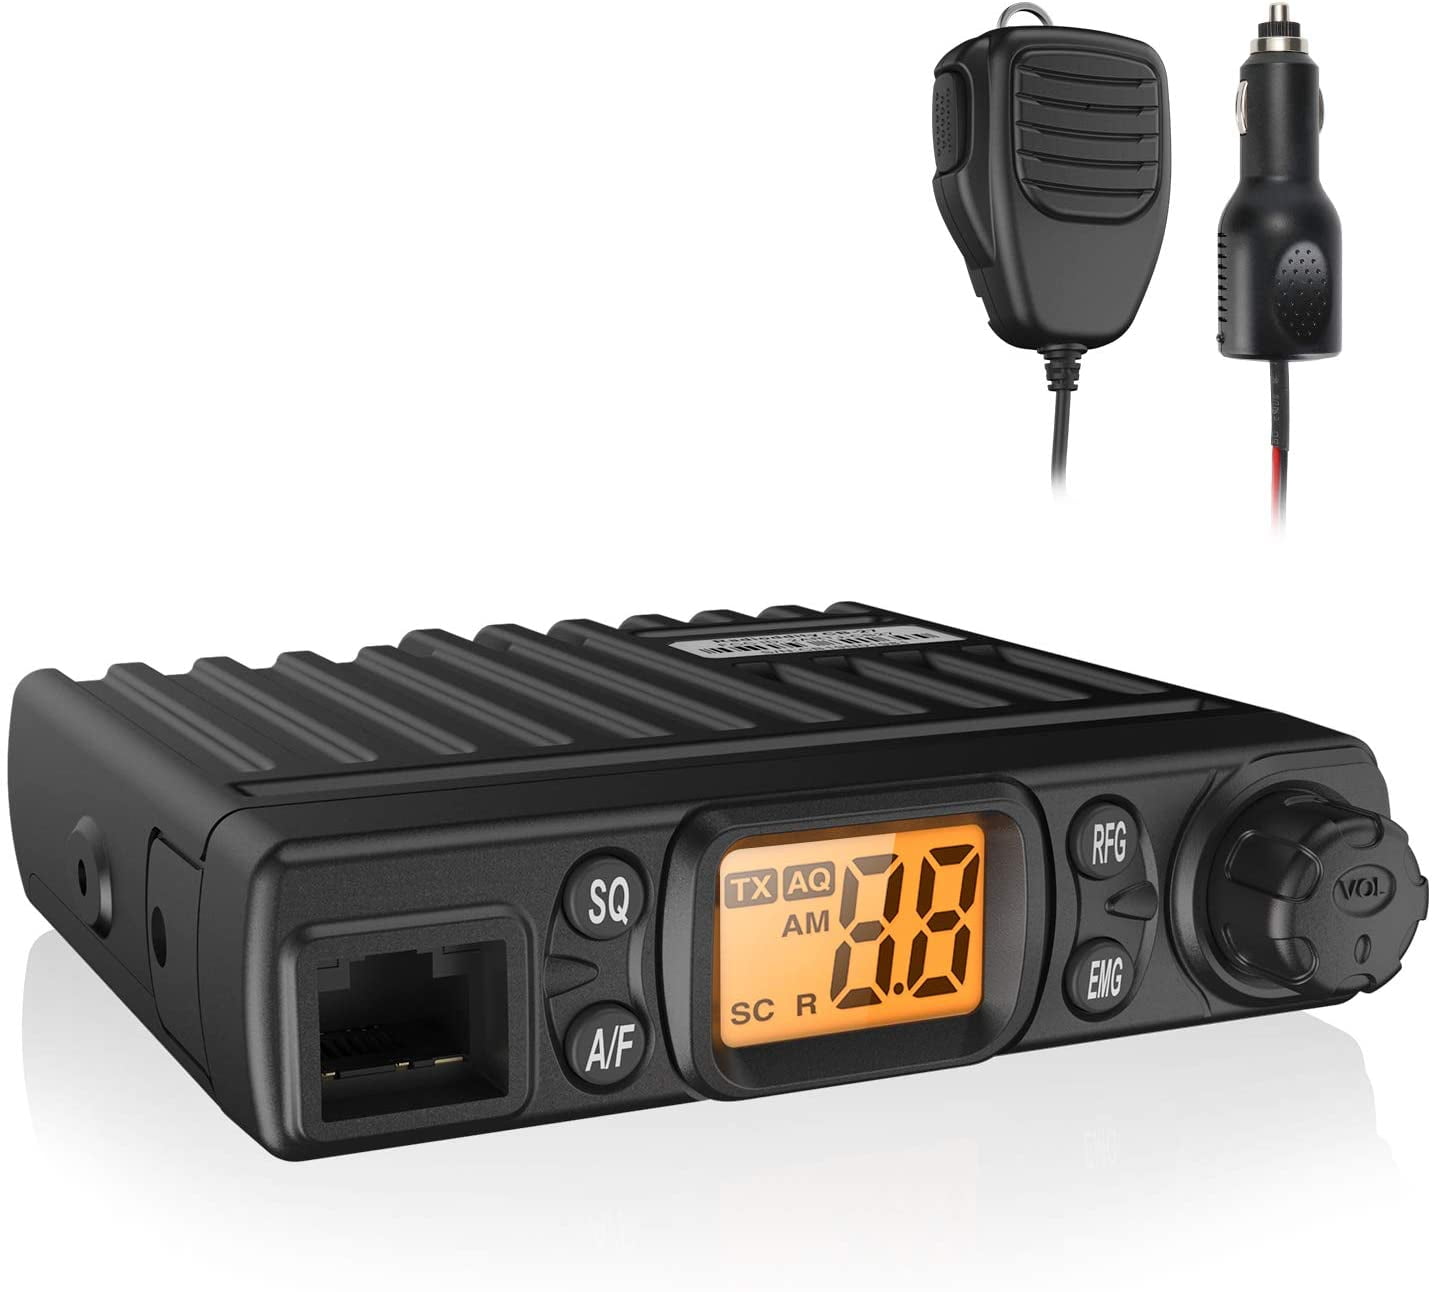 Radioddity Radio CB-27 Pro CB de 40 canales mini móvil con canal de  emergencia instantánea AM FM 9/19, salida de potencia de 4W, pantalla LCD,  VOX